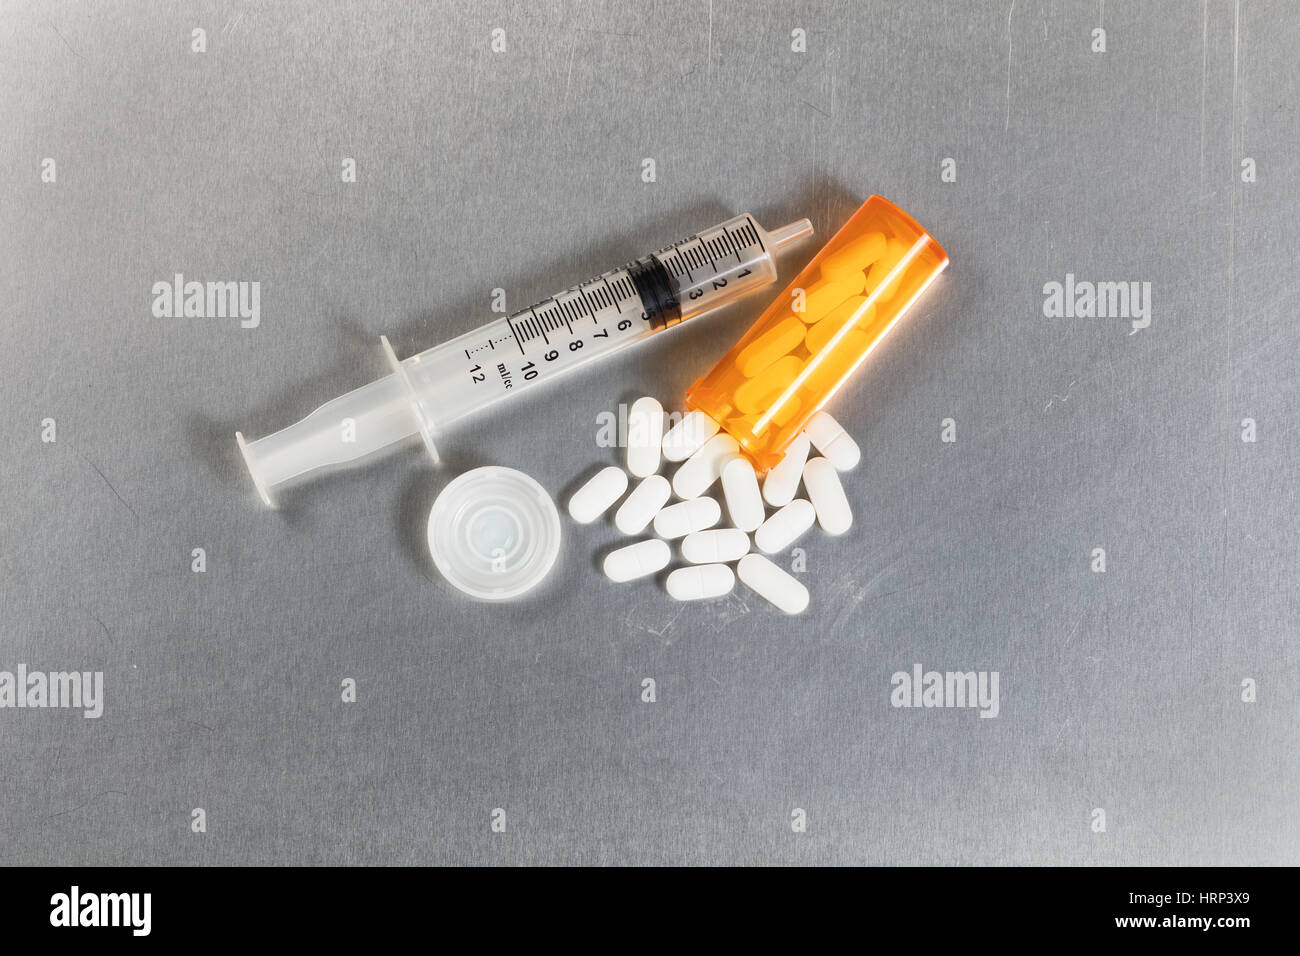 Vista plana De painkiller píldoras con botella abierta y la jeringa. Concepto de epidemia de opioides. Foto de stock